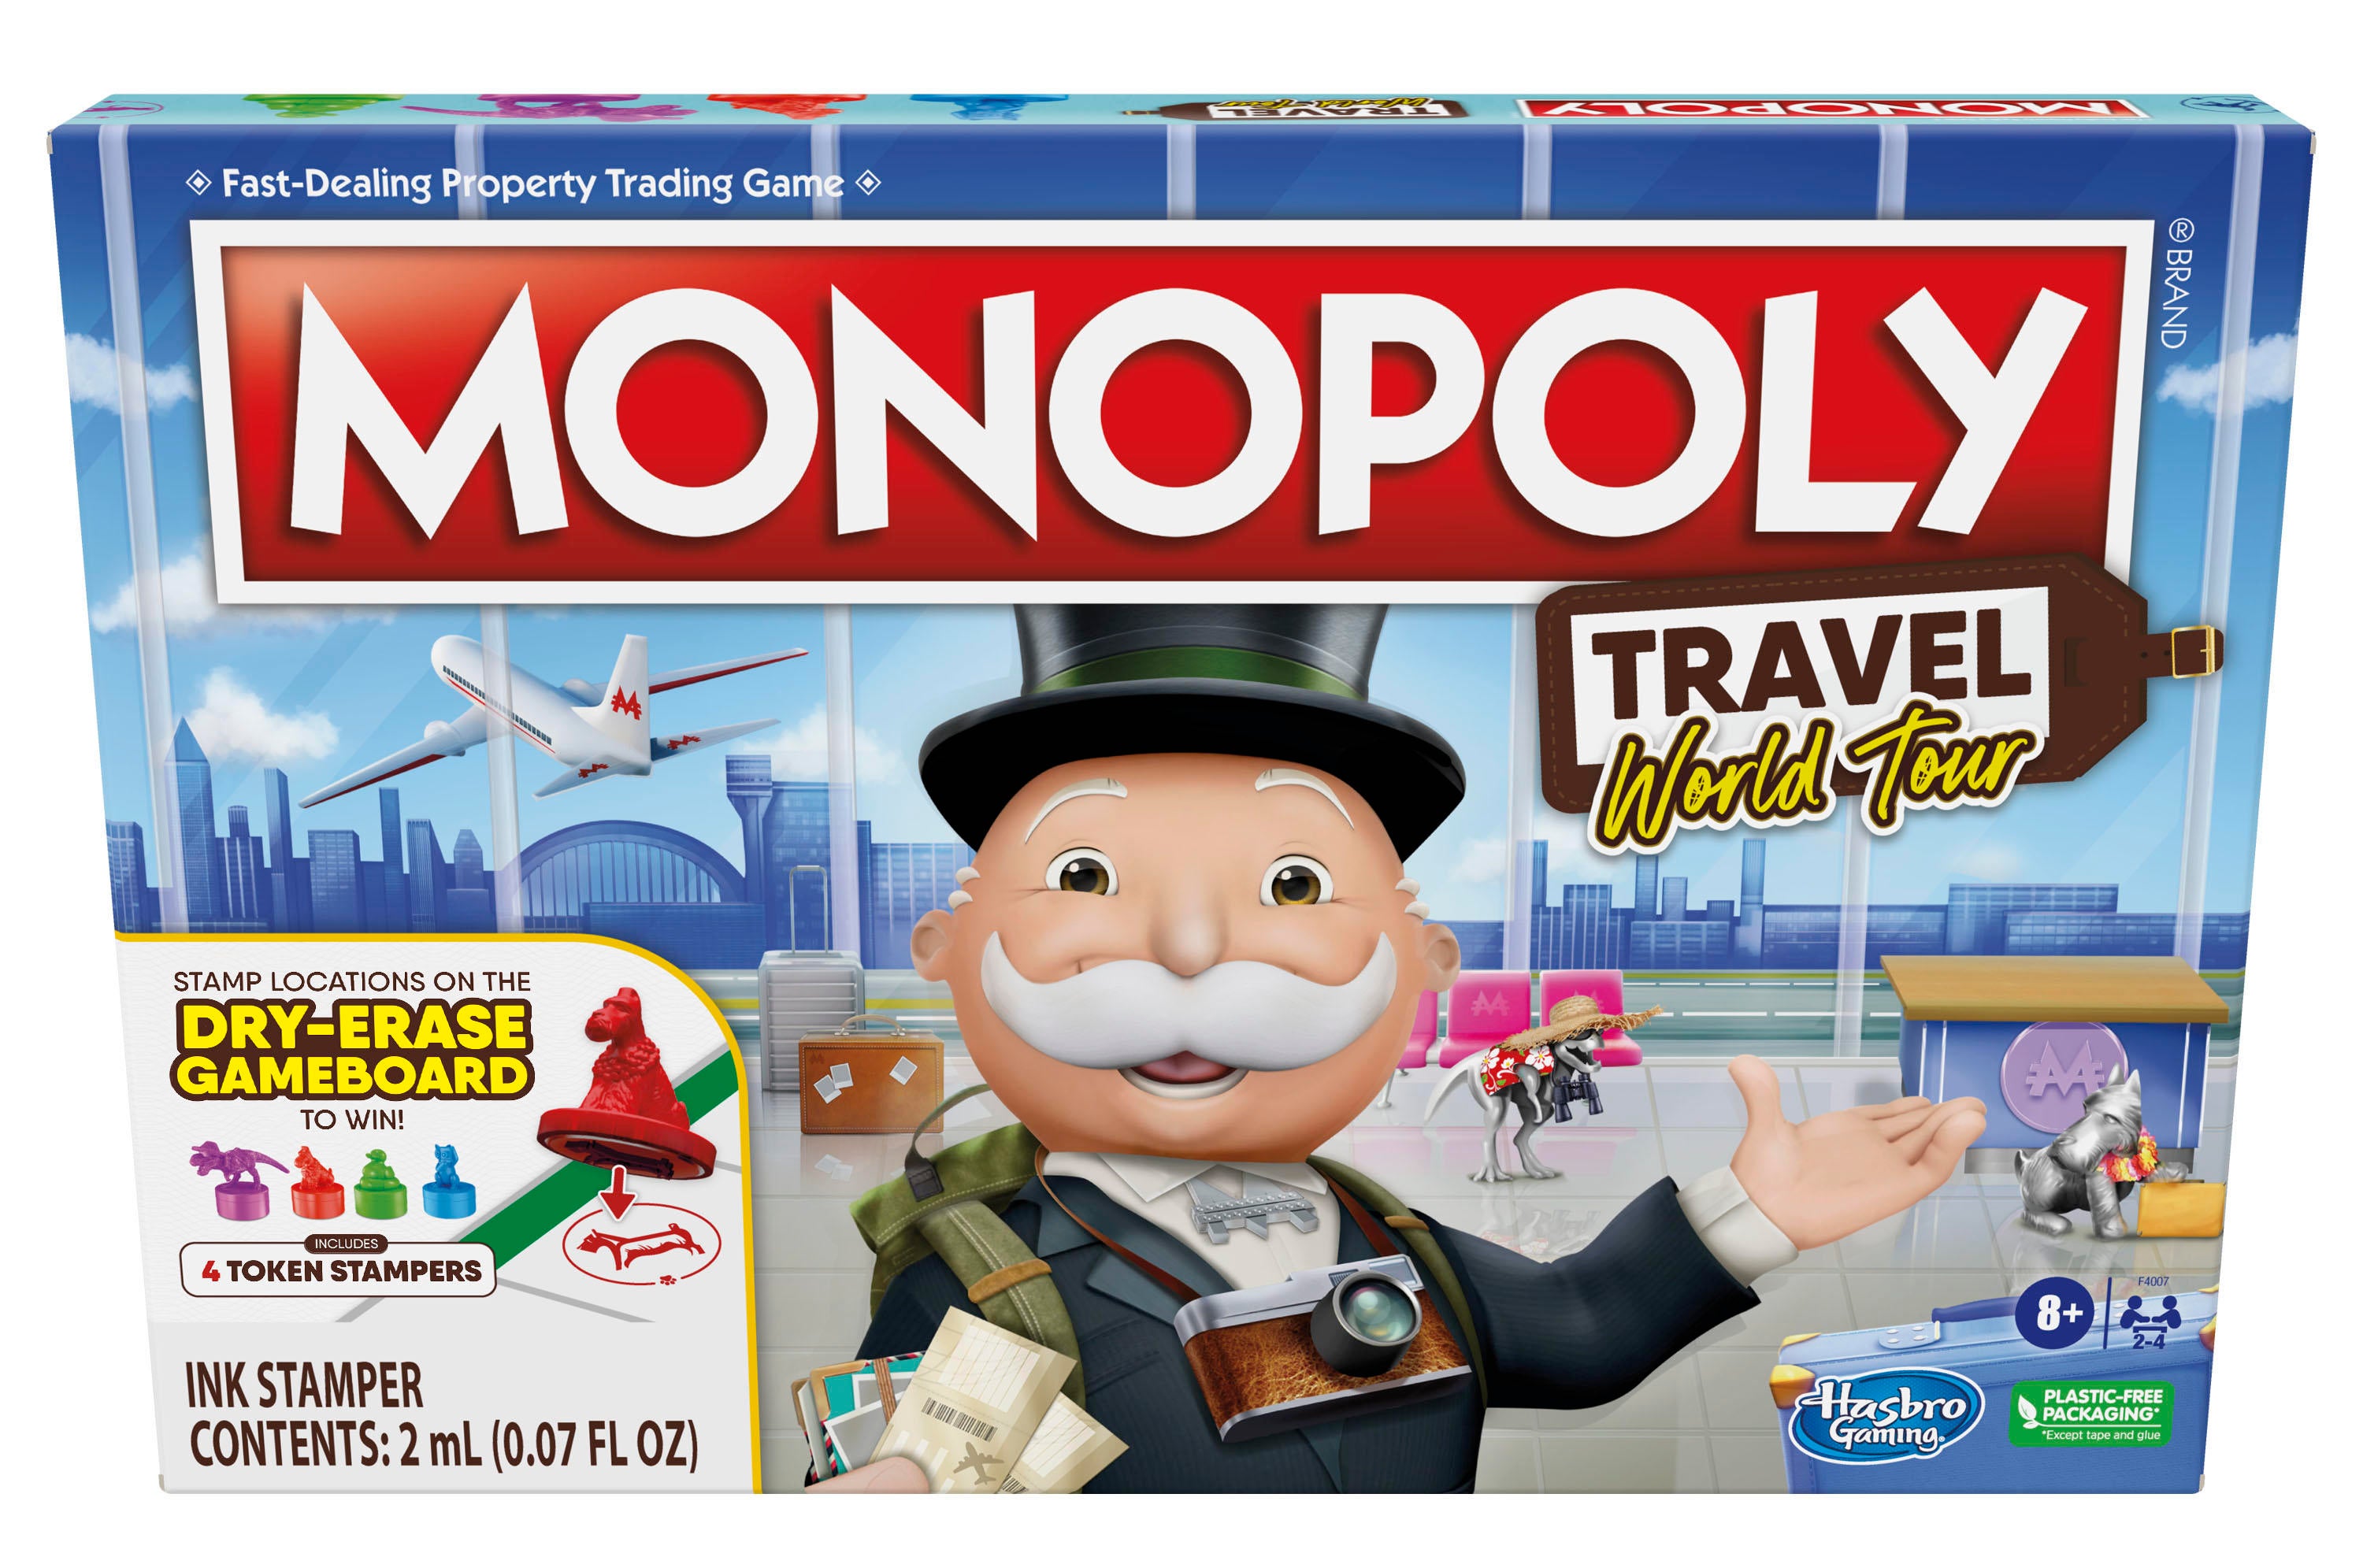 monopoly-travel-world-tour-box.jpg